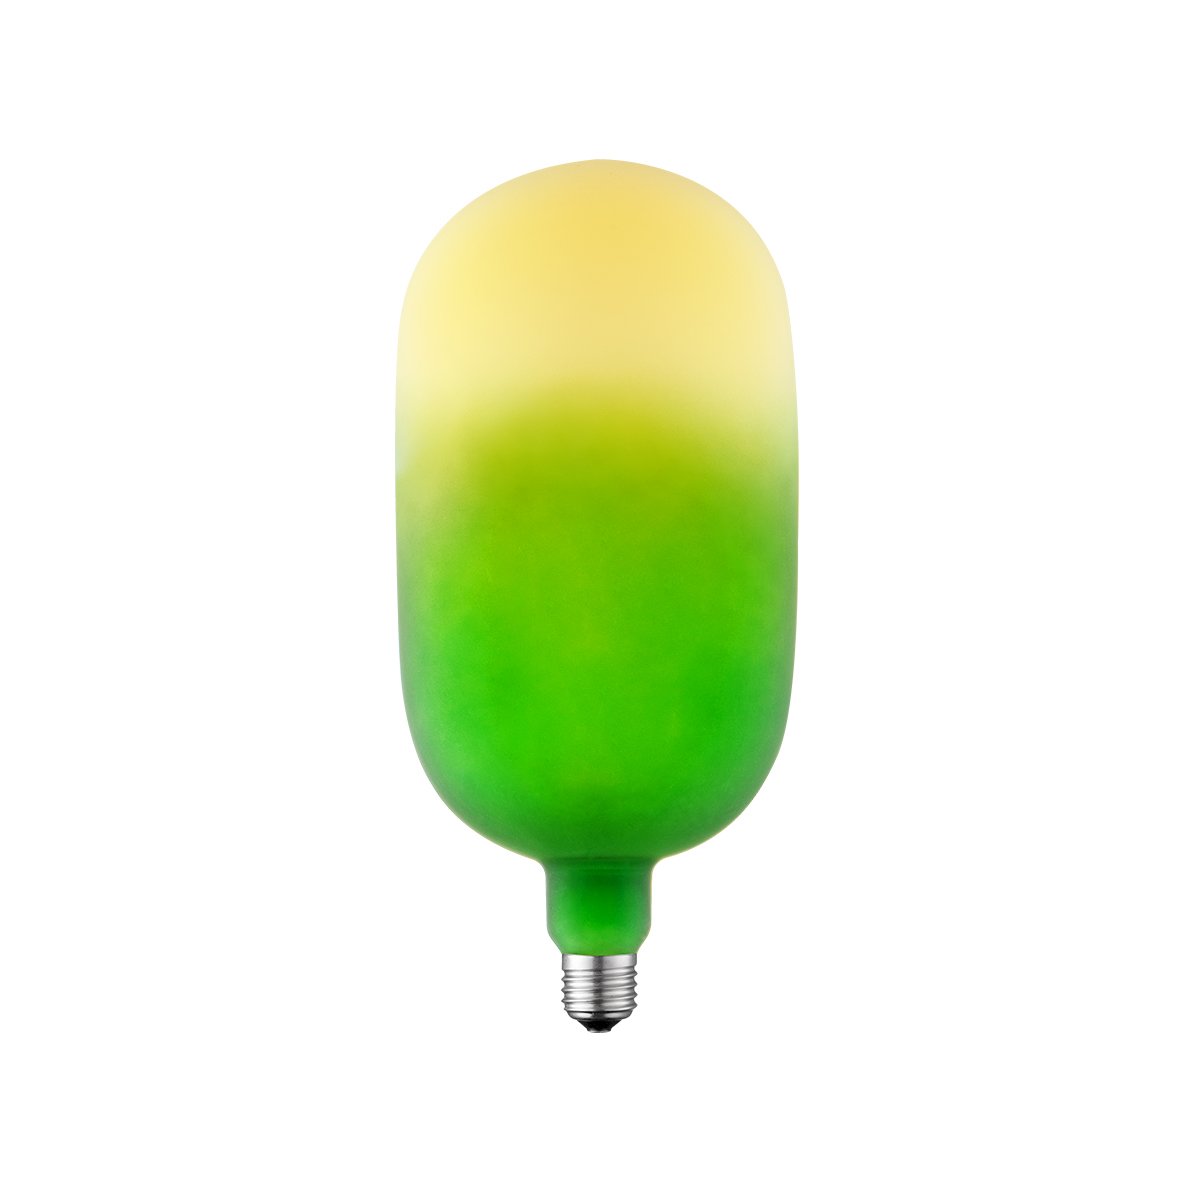 Tangla lighting - TLB-9001-04O - LED Light Bulb Single Spiral filament - 4W gradient green opal - medium - non dimmable - E27